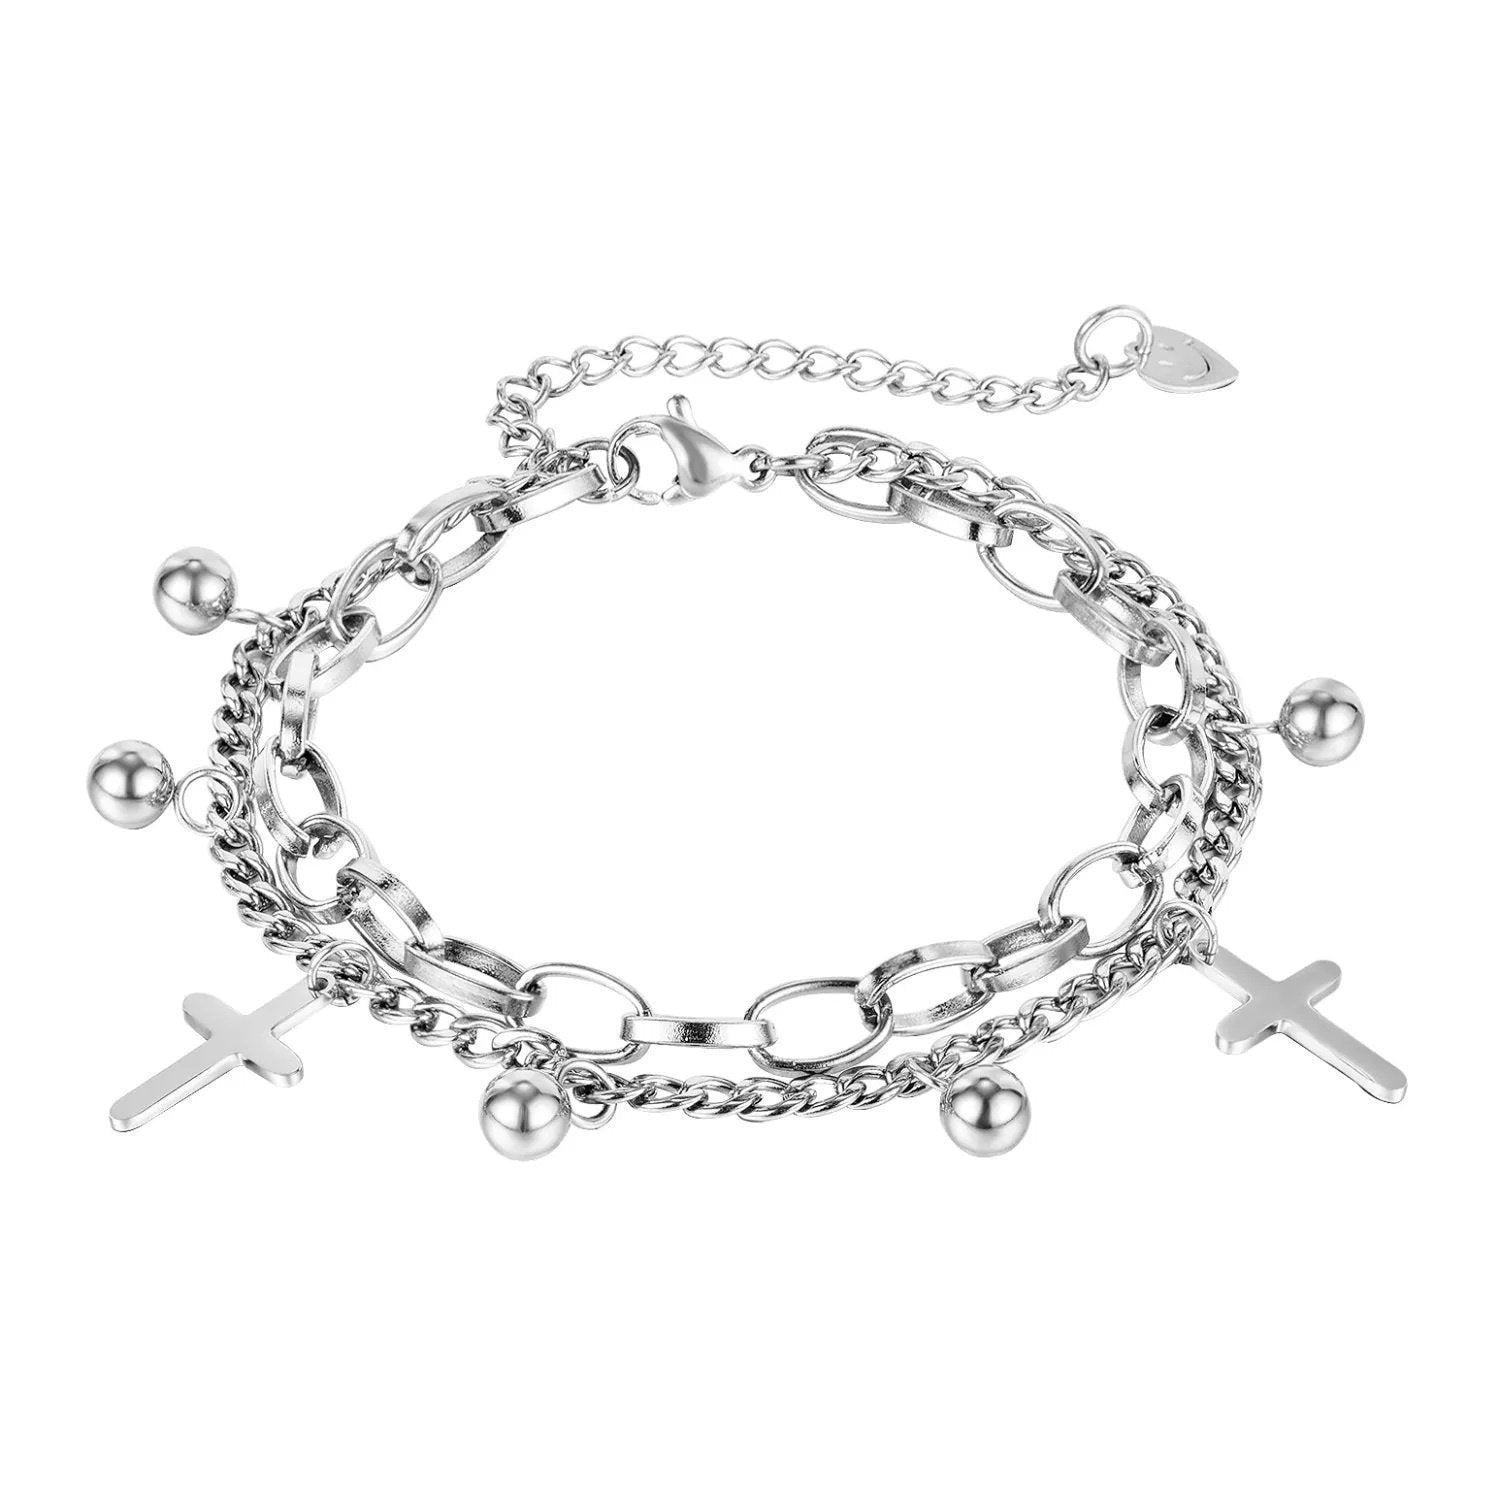 Mystery + Stainless Steel + Charm Bracelets